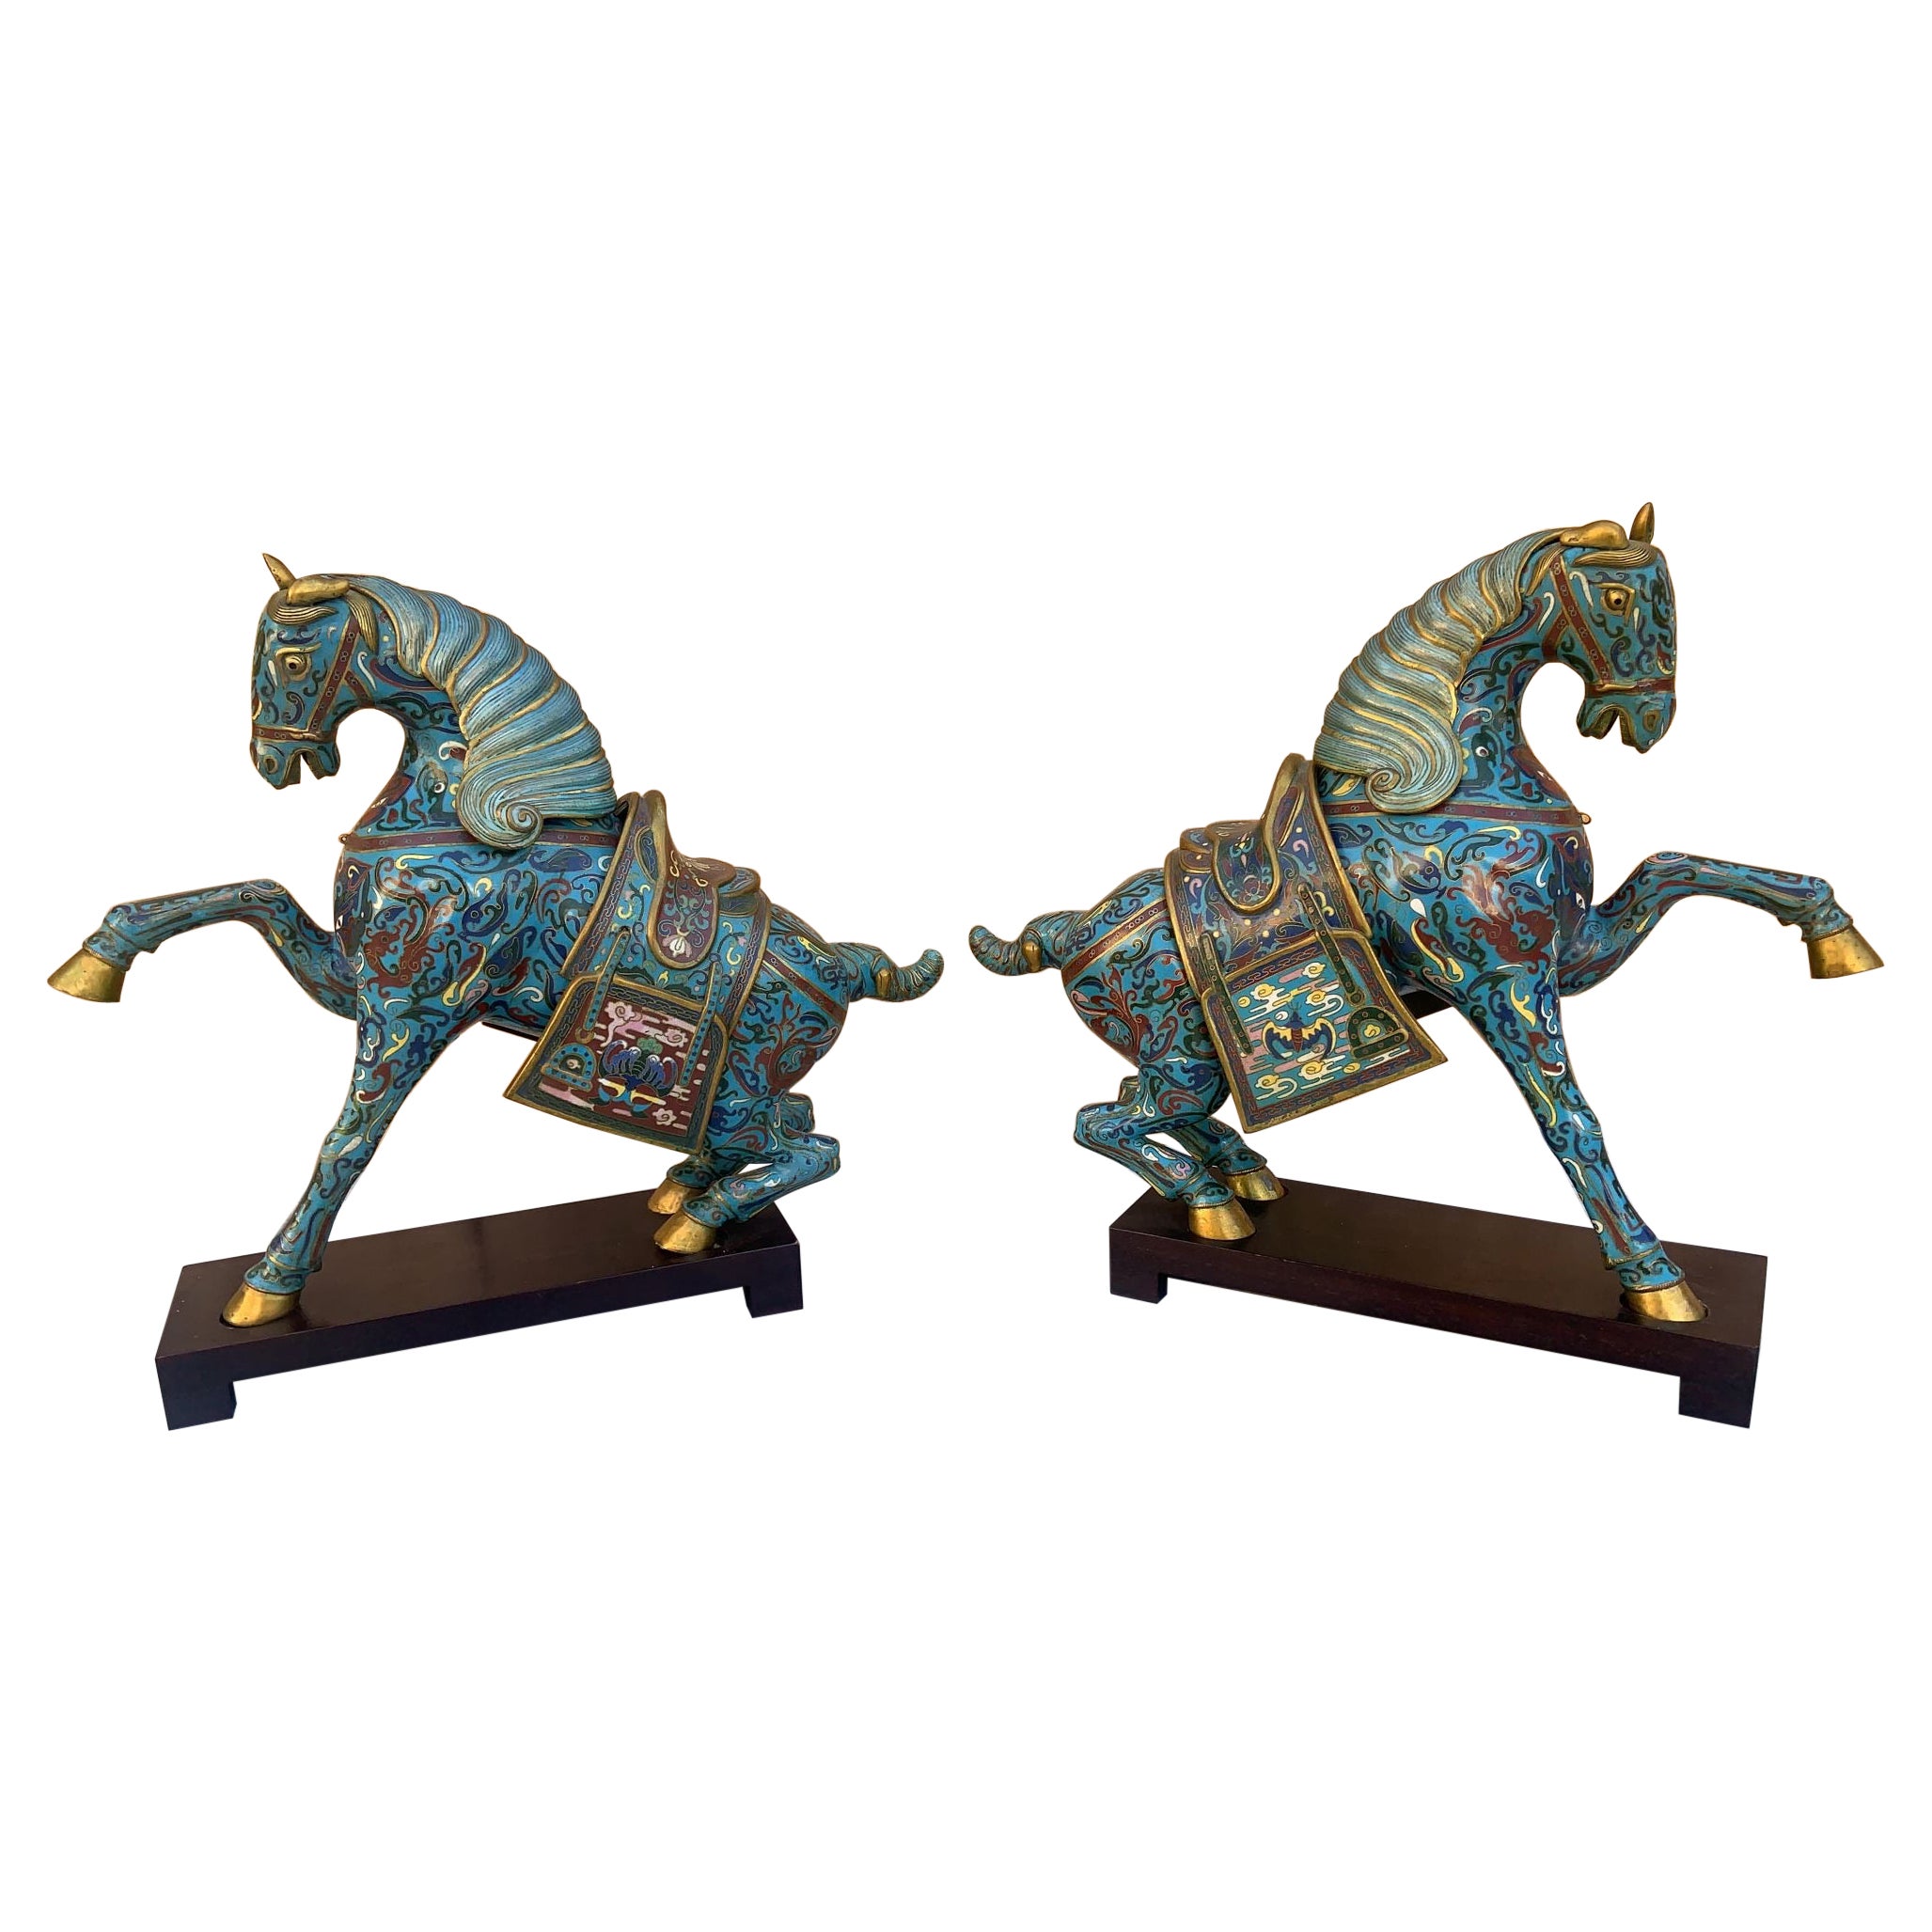 Vintage Chinese Cloisonné War Horse Skulpturen auf Mahagoni Basis - Paar